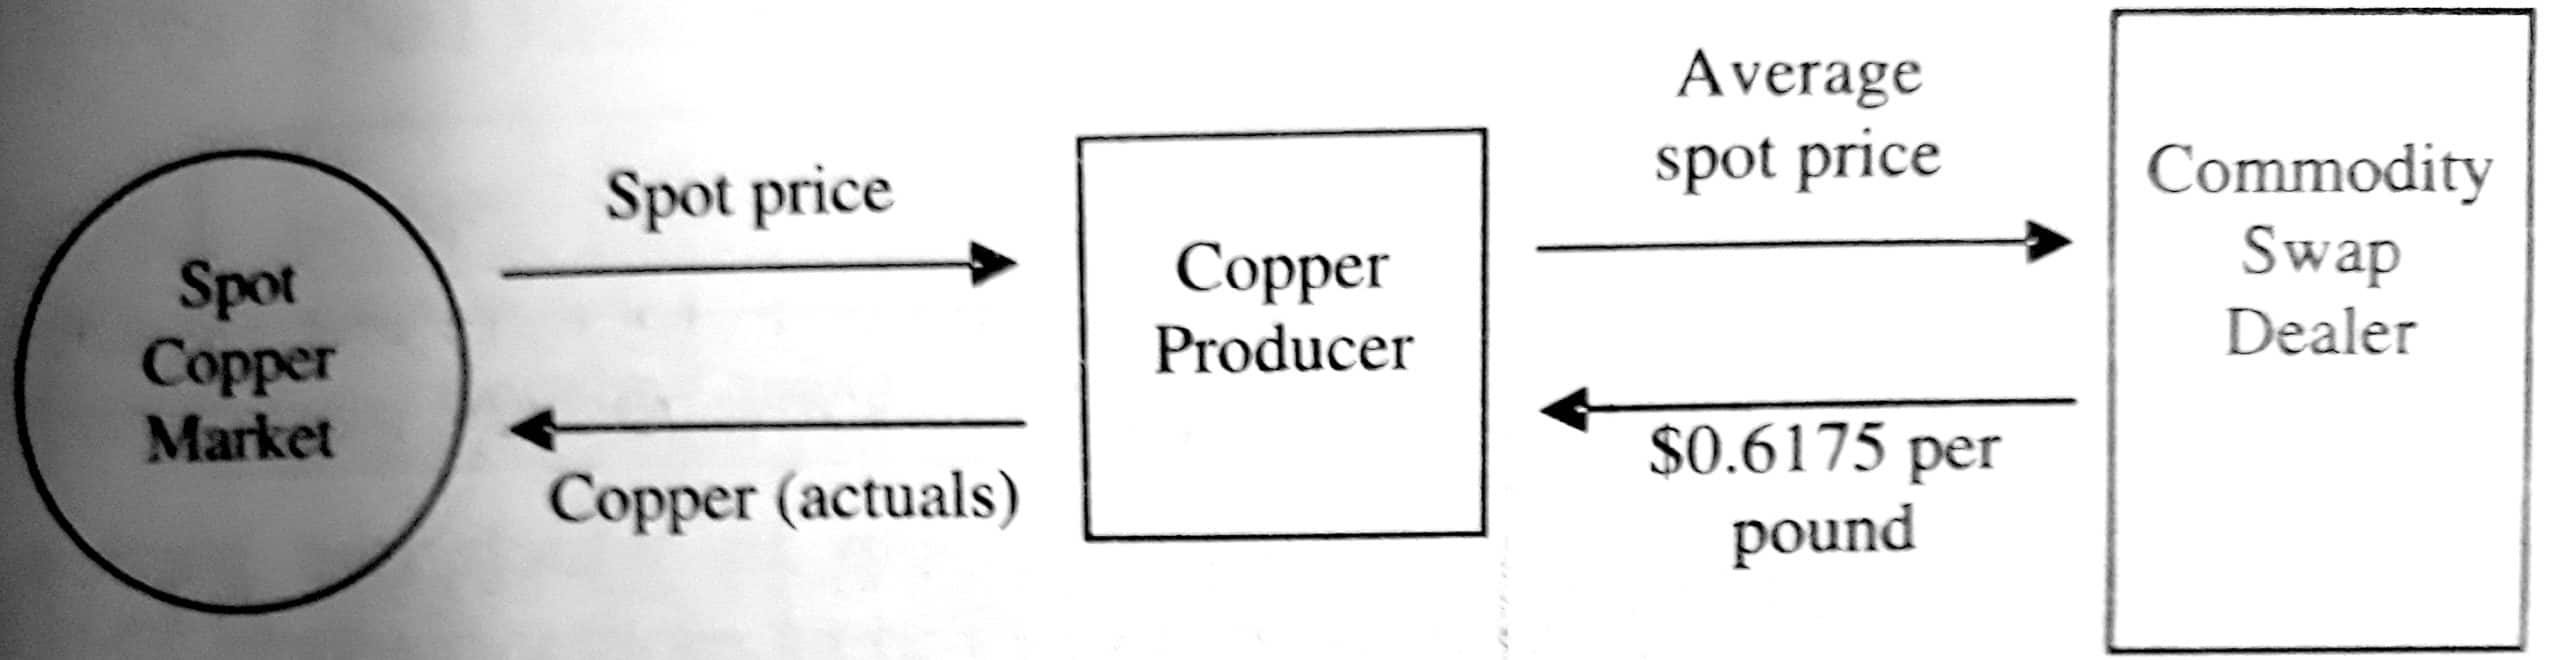 Basic Copper (Commodity) Swap